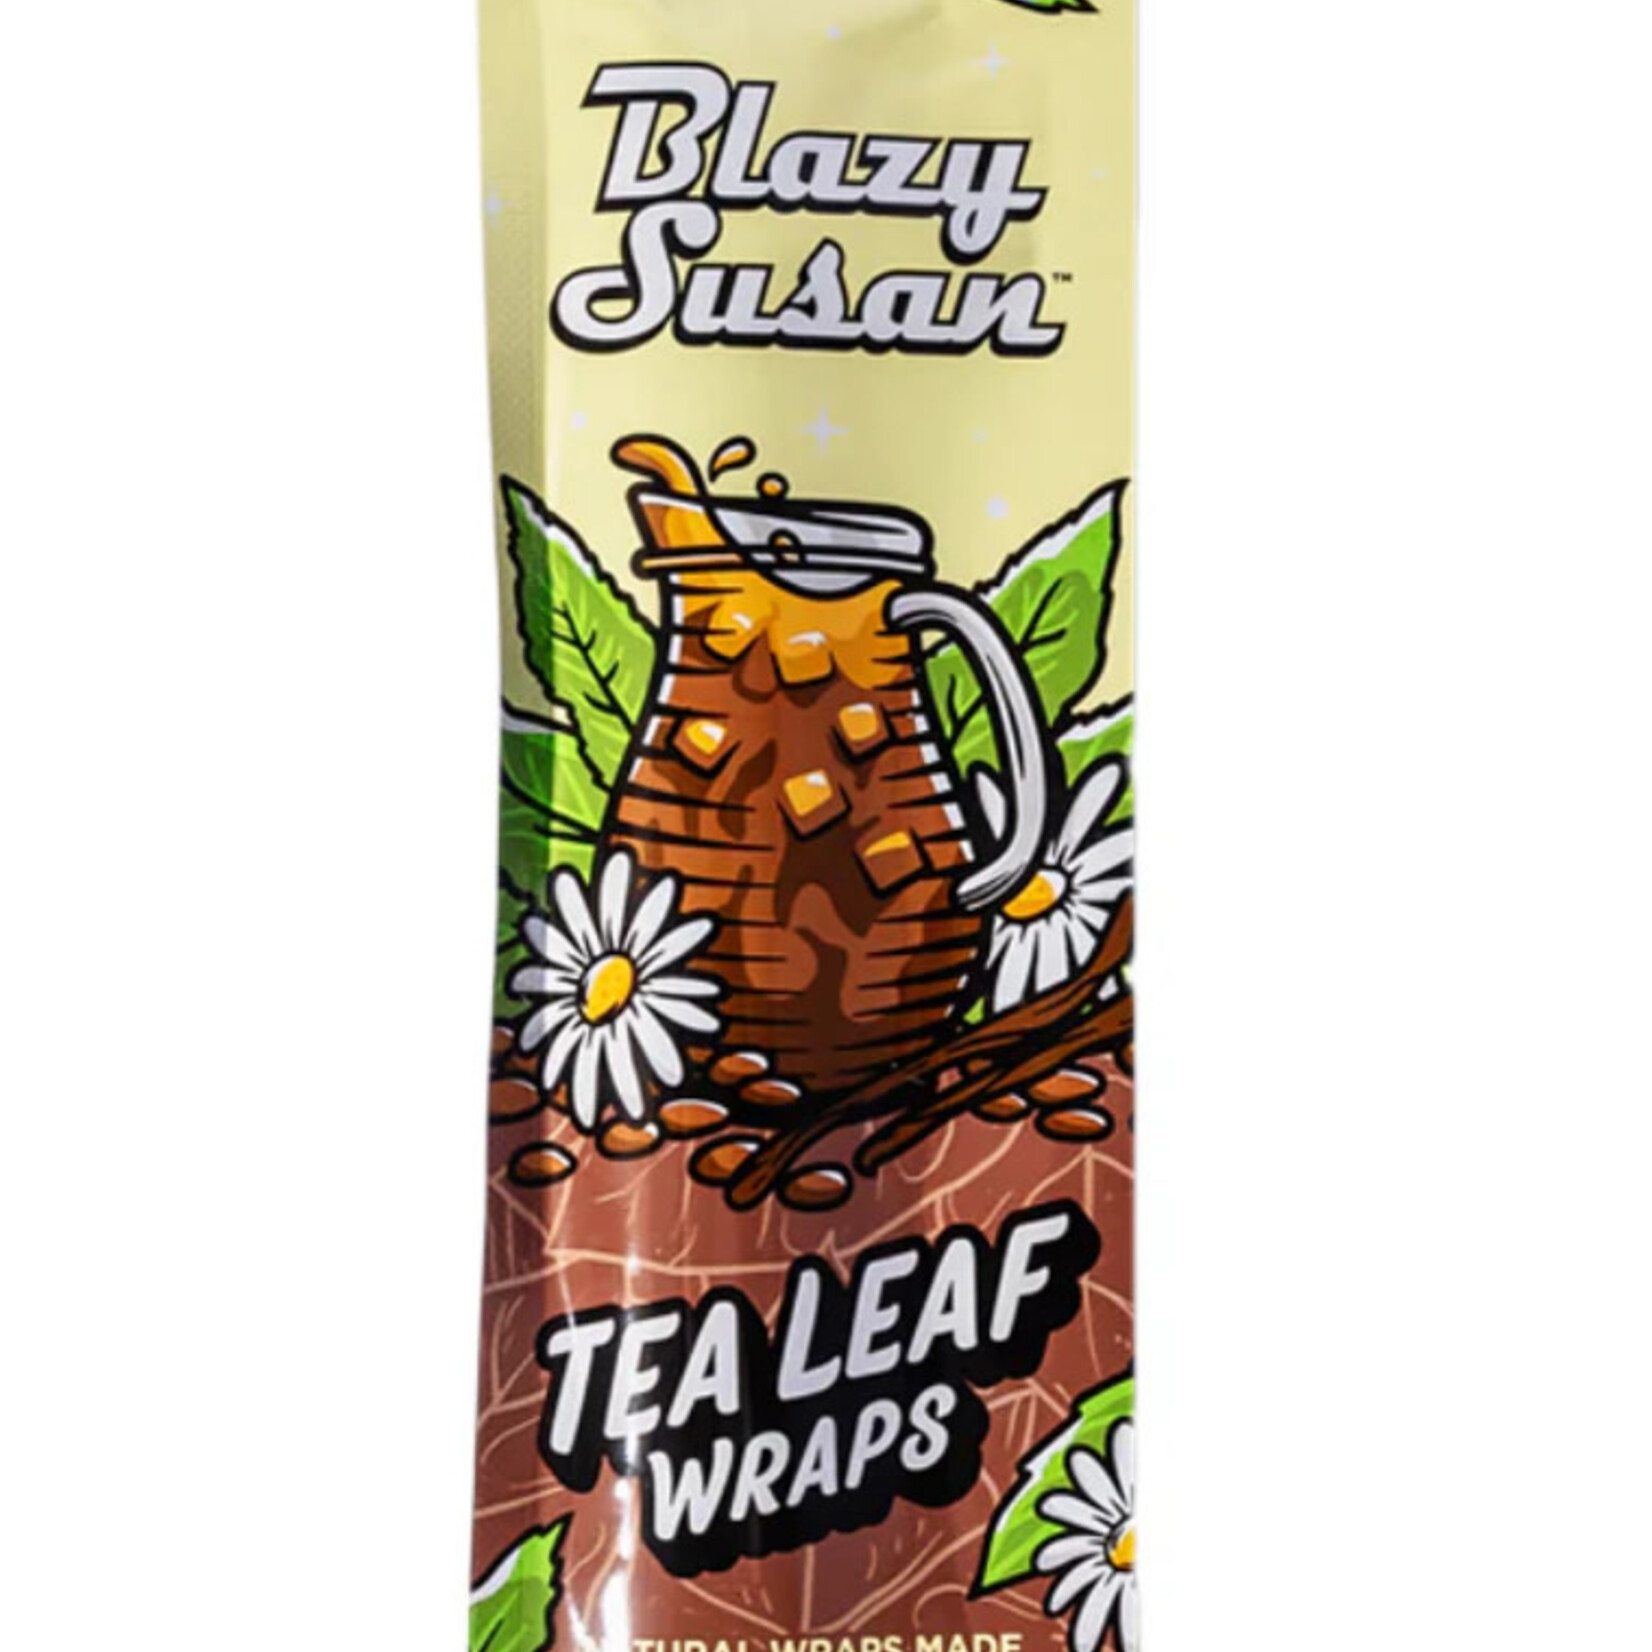 BLAZY SUSAN TEA LEAF WRAPS single